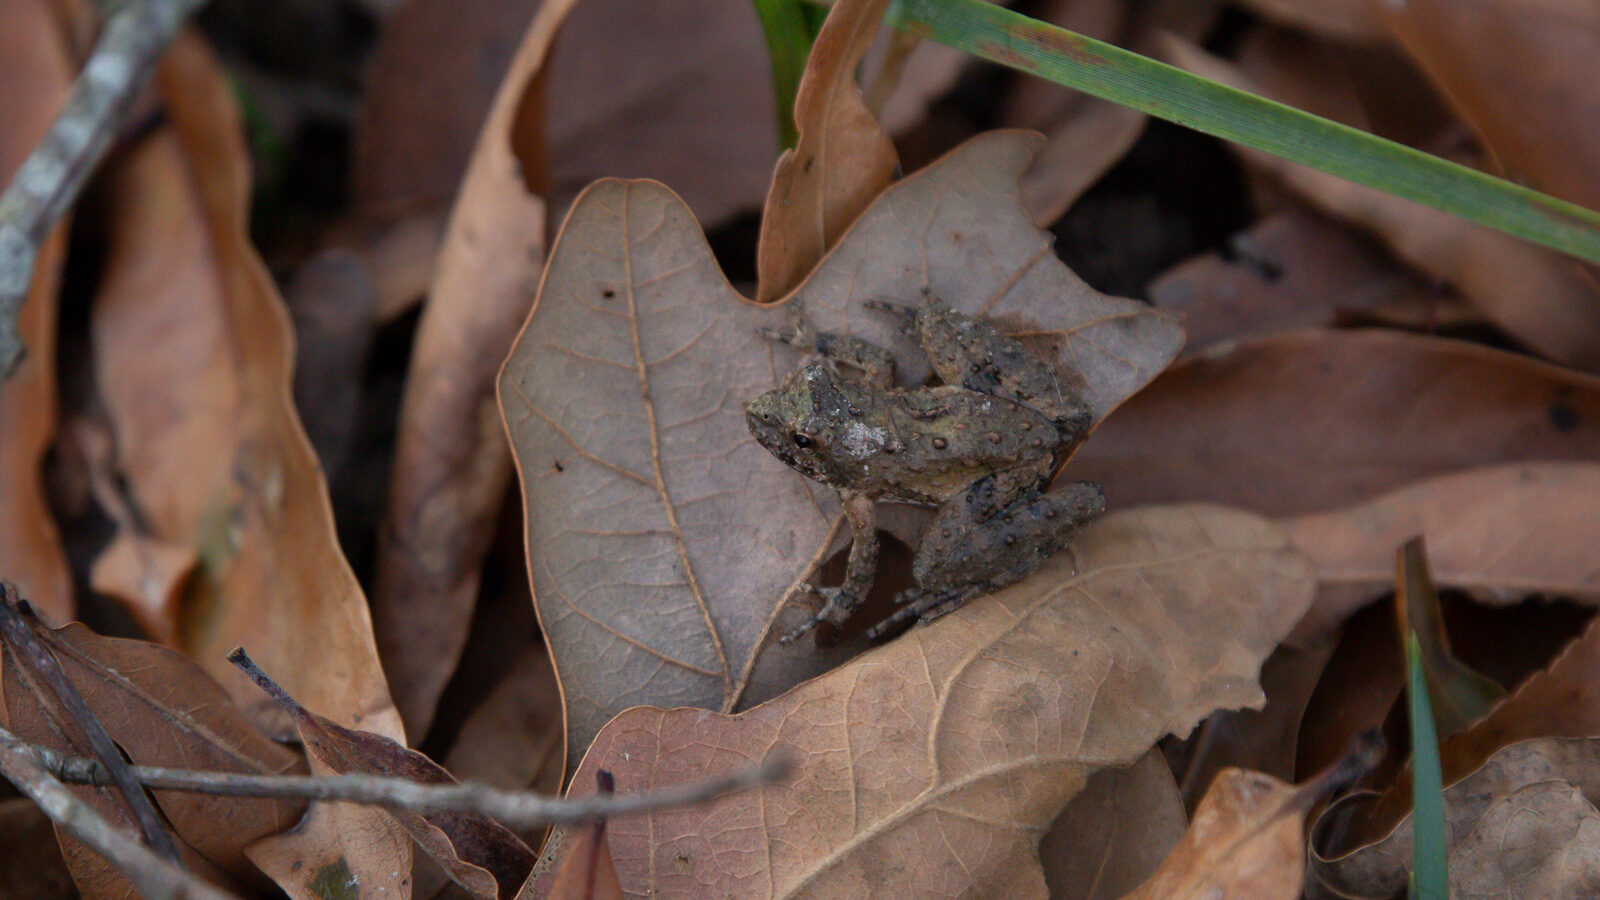 Northern cricket frog on a brown leaf